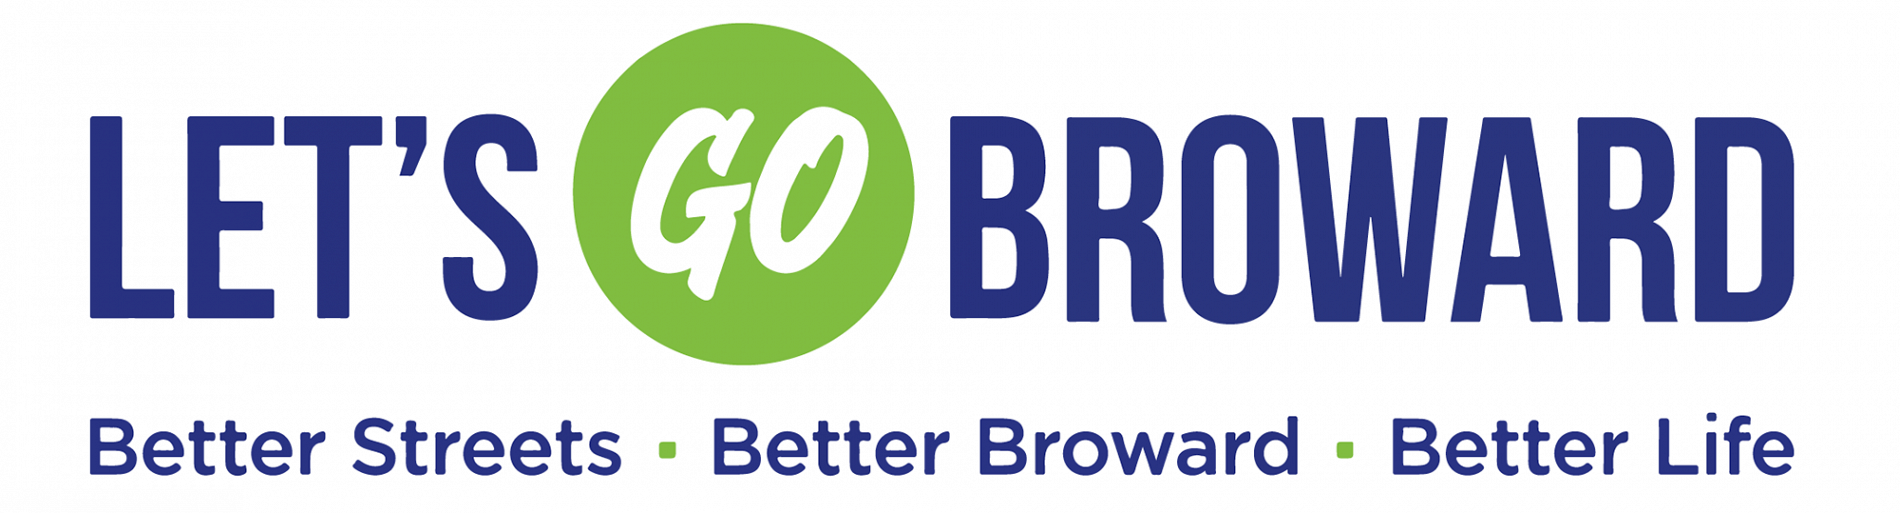 Lets Go Broward White logo